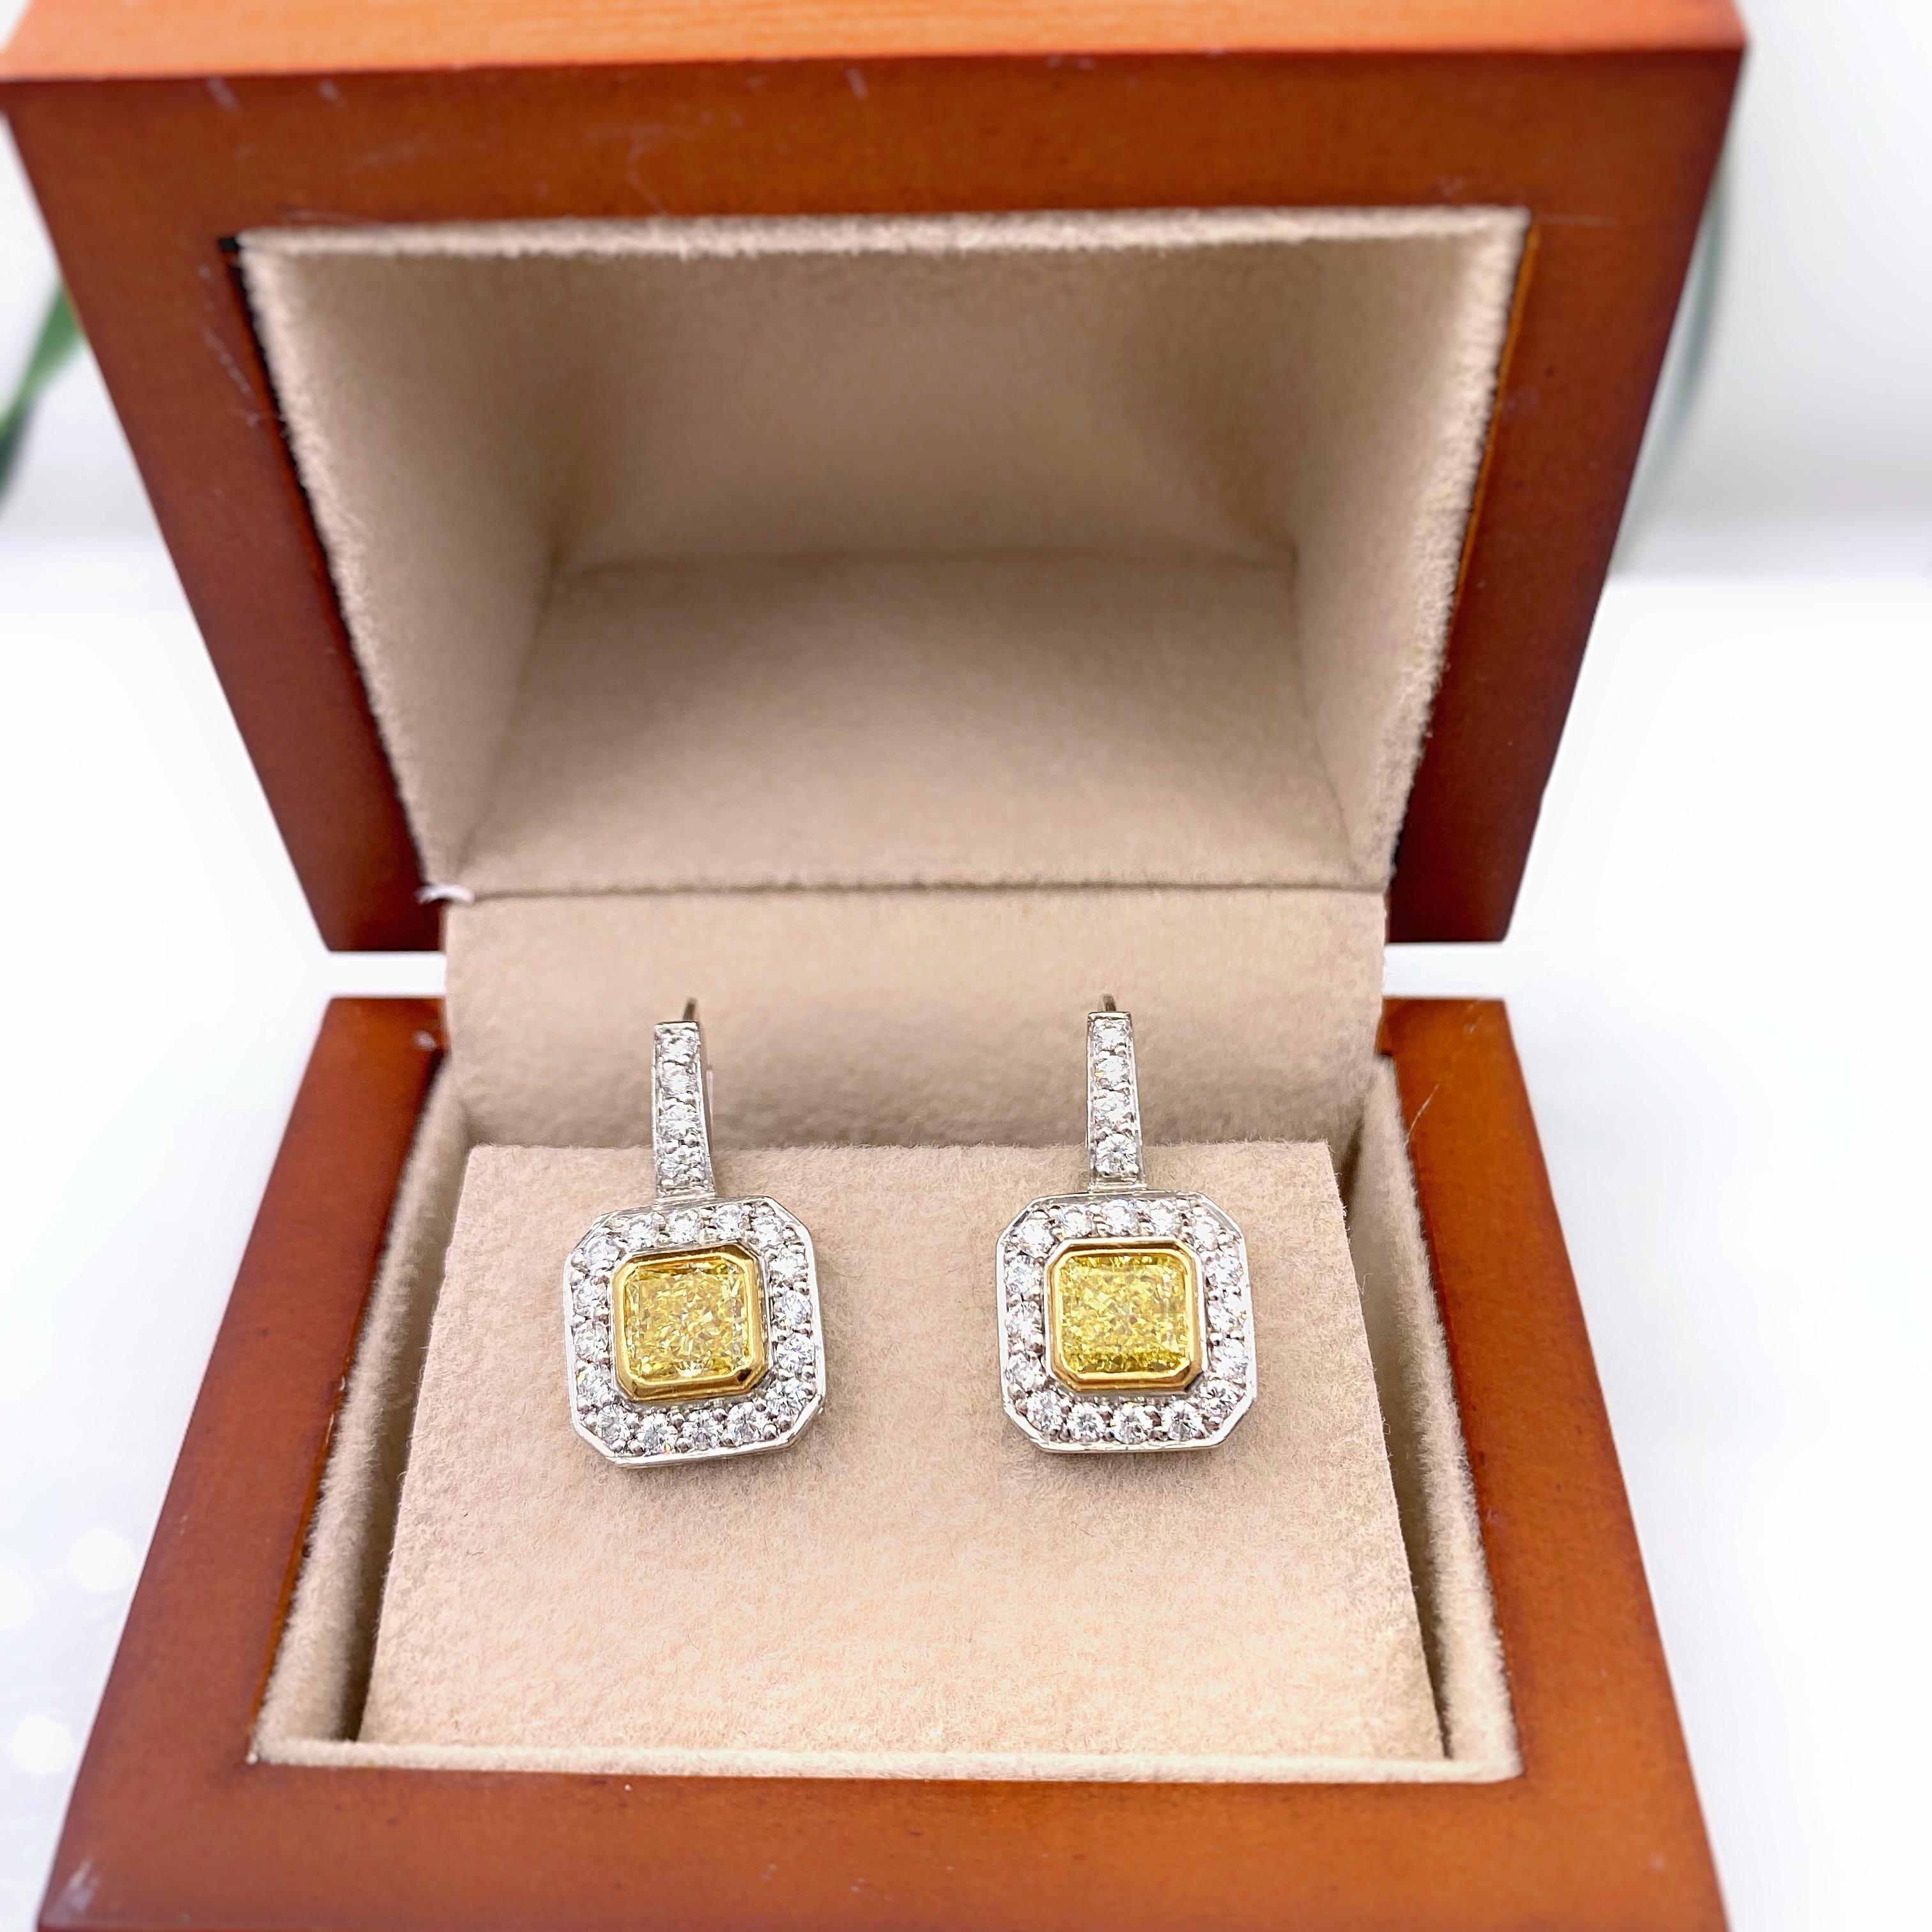 Fancy Yellow Diamond Earrings
Style:  Dangle
Metal:  14 kt White & Yellow Gold
Size:  19 MM Length = 10 MM Width
TCW:  2.20 tcw
Main Diamond:  Radiant Diamonds 1.40 tcw 
Color & Clarity:  Fancy Yellow - VS1
Accent Diamonds:  40 Round Brilliant